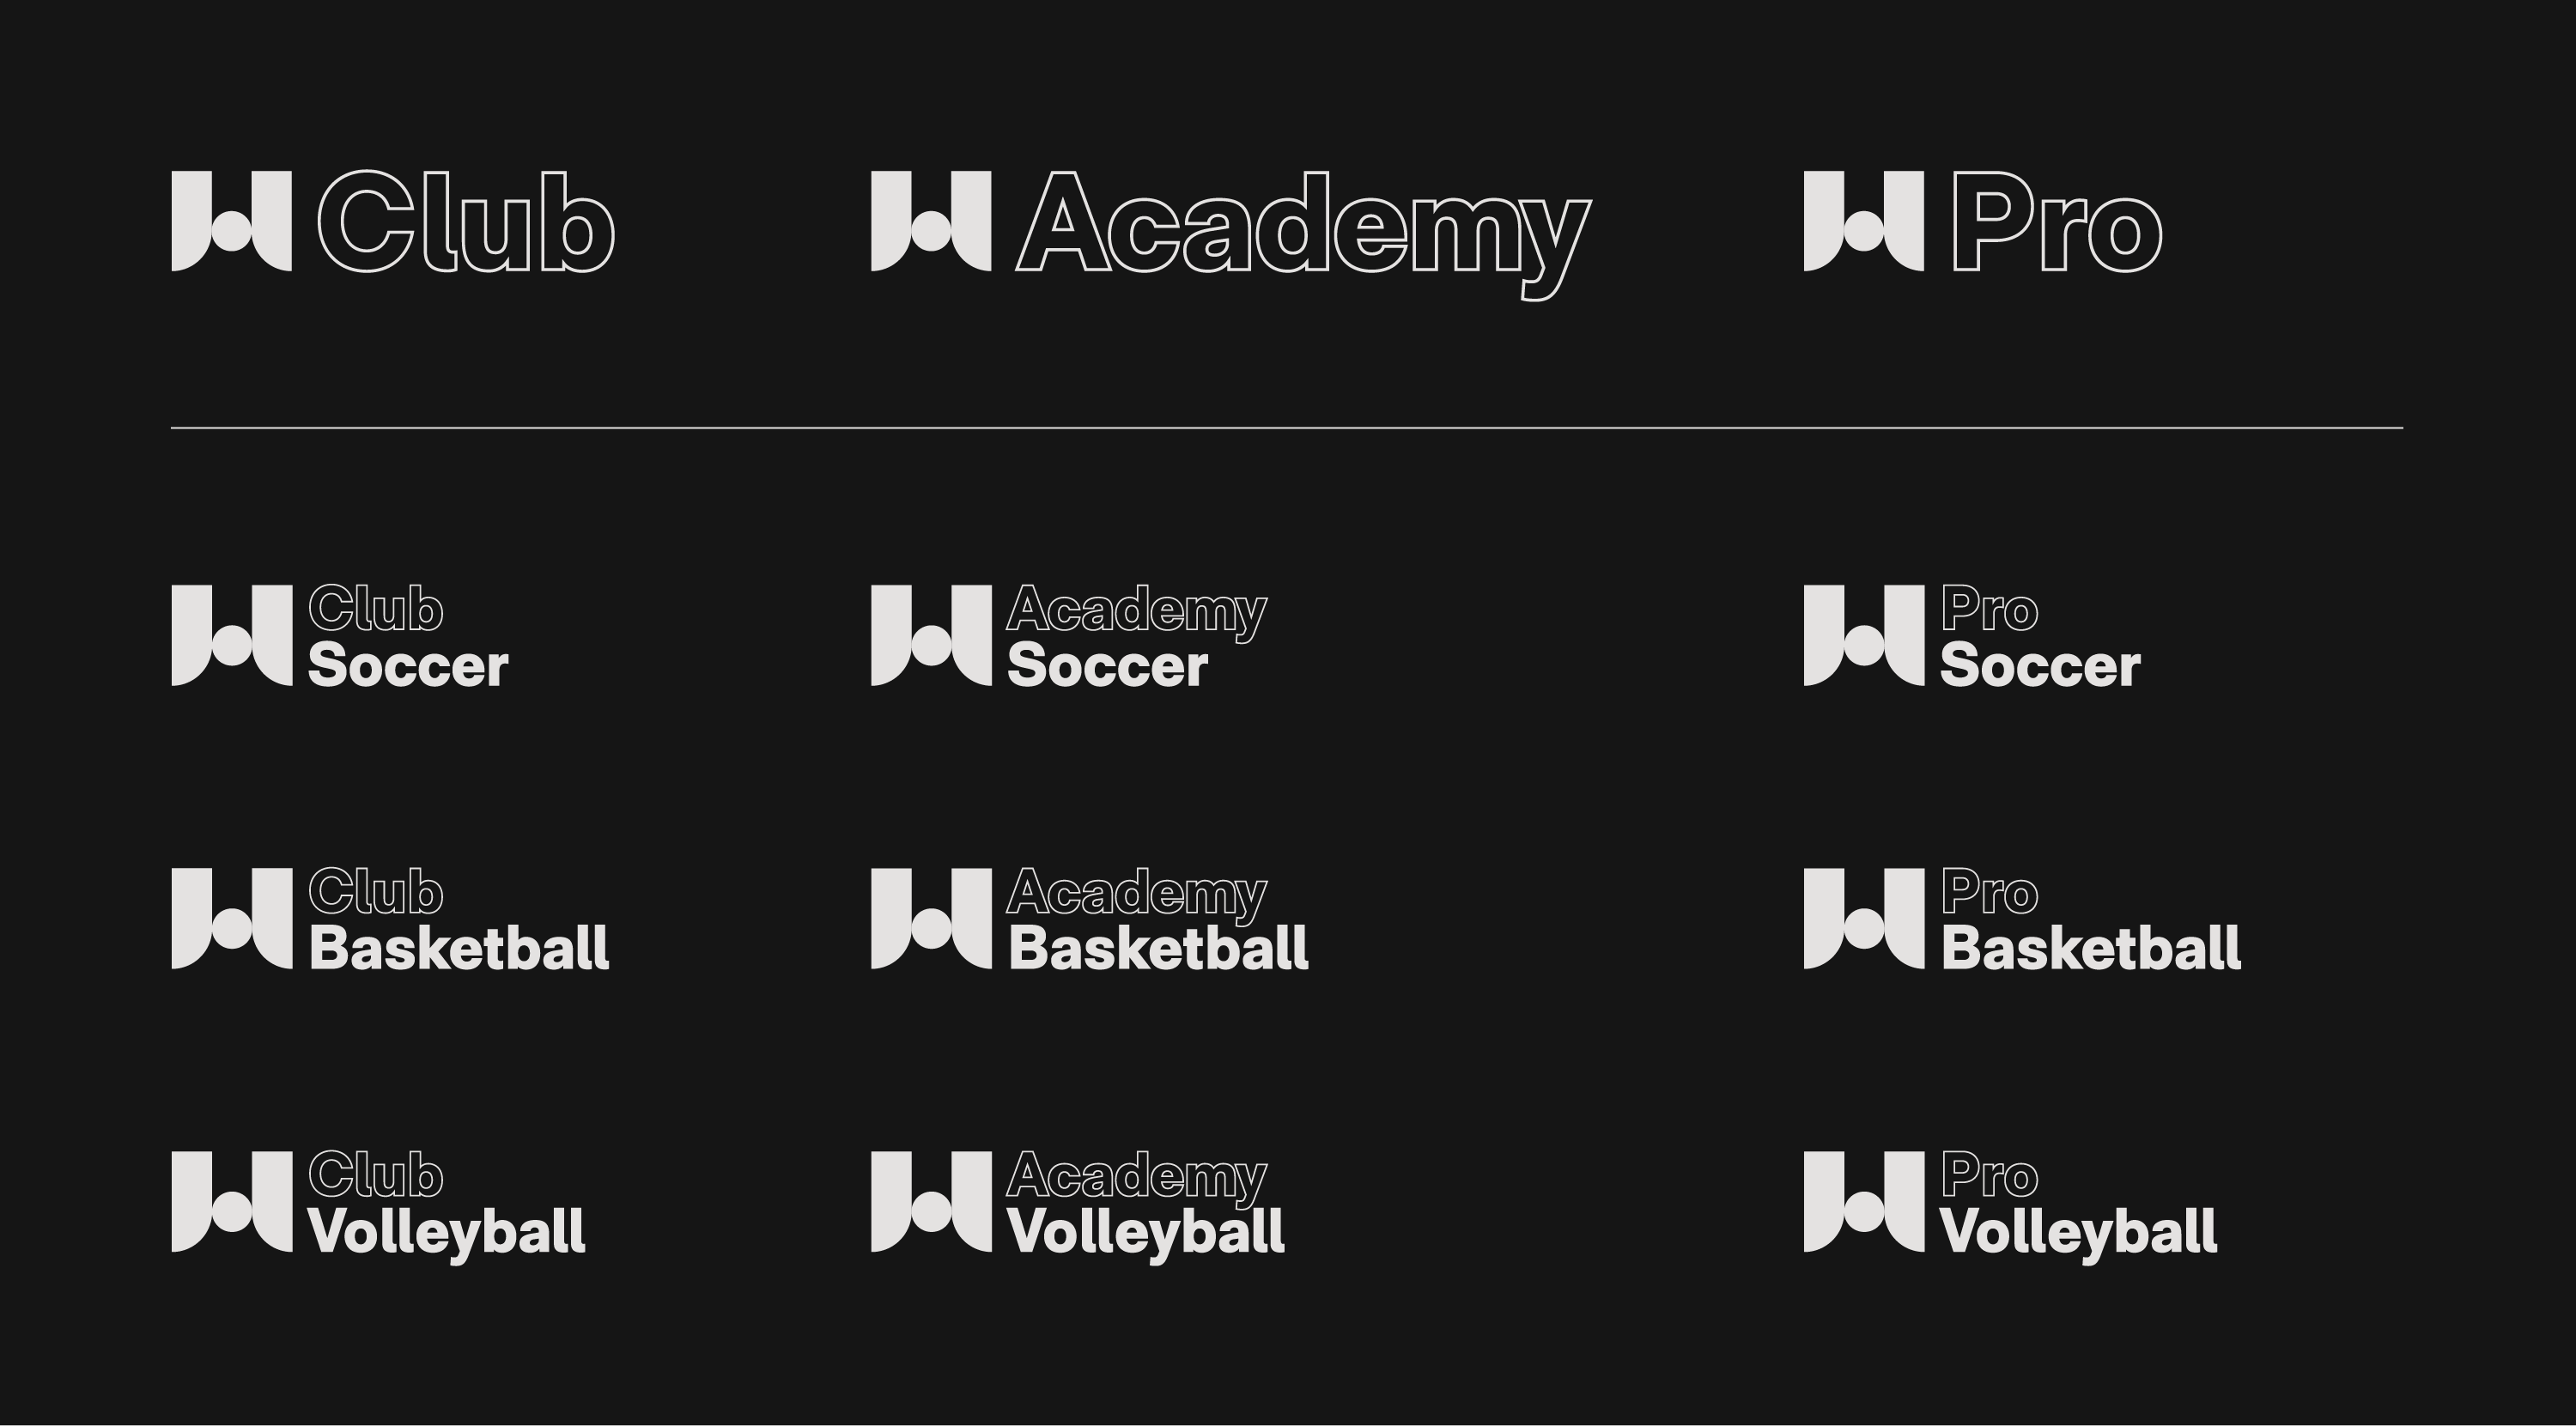 Various WFA logos in black and white